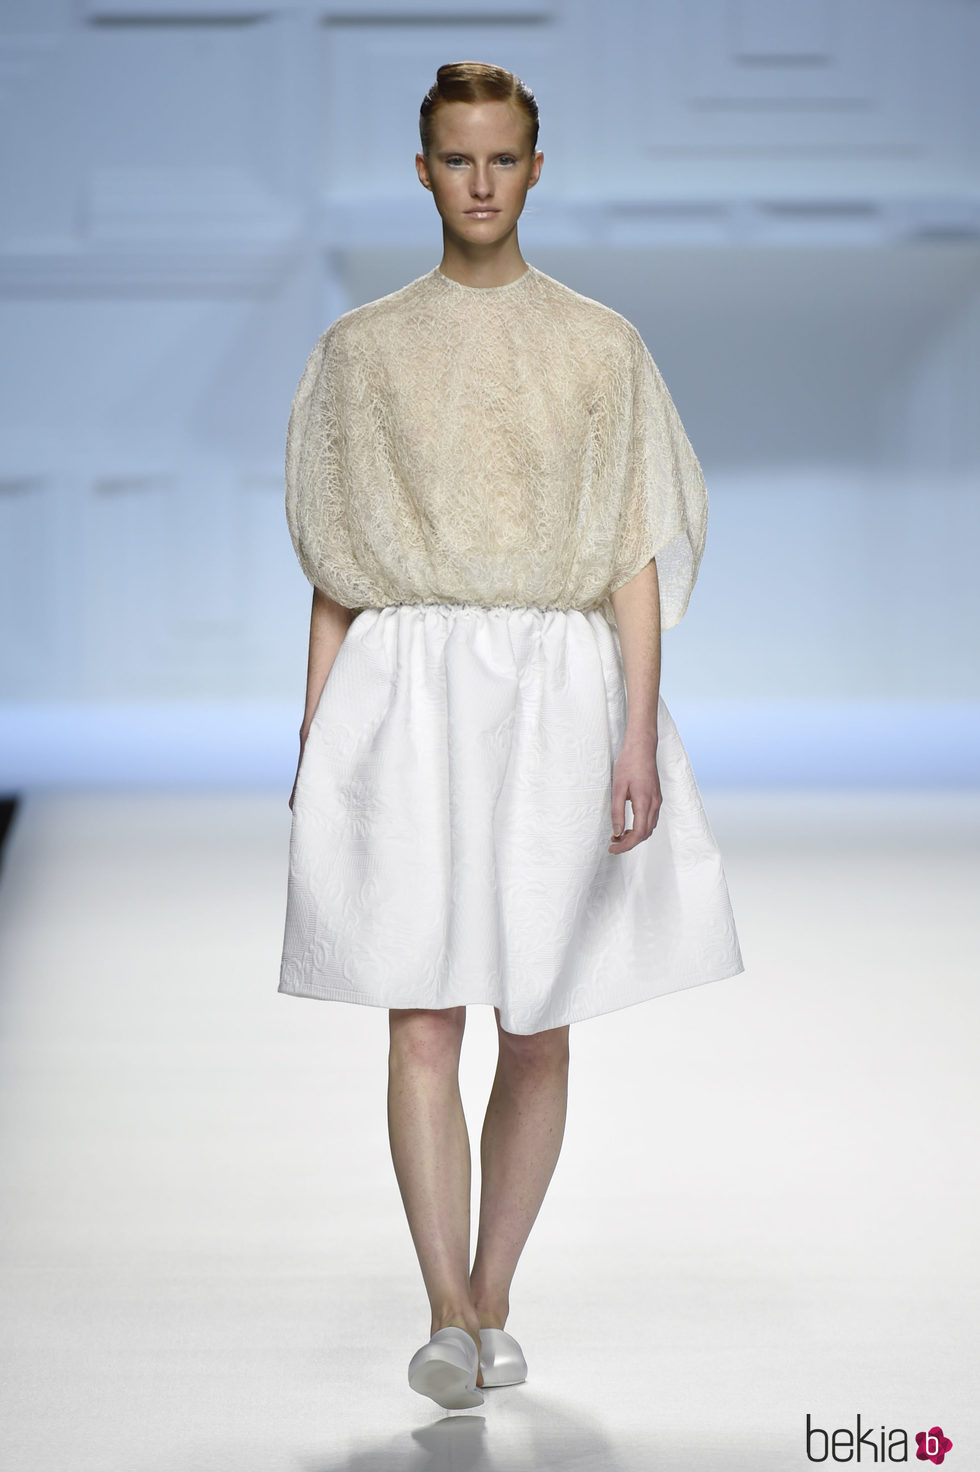 Blusa beige y falda blanca de Devota & Lomba primavera/verano 2018 en Madrid Fashion Week